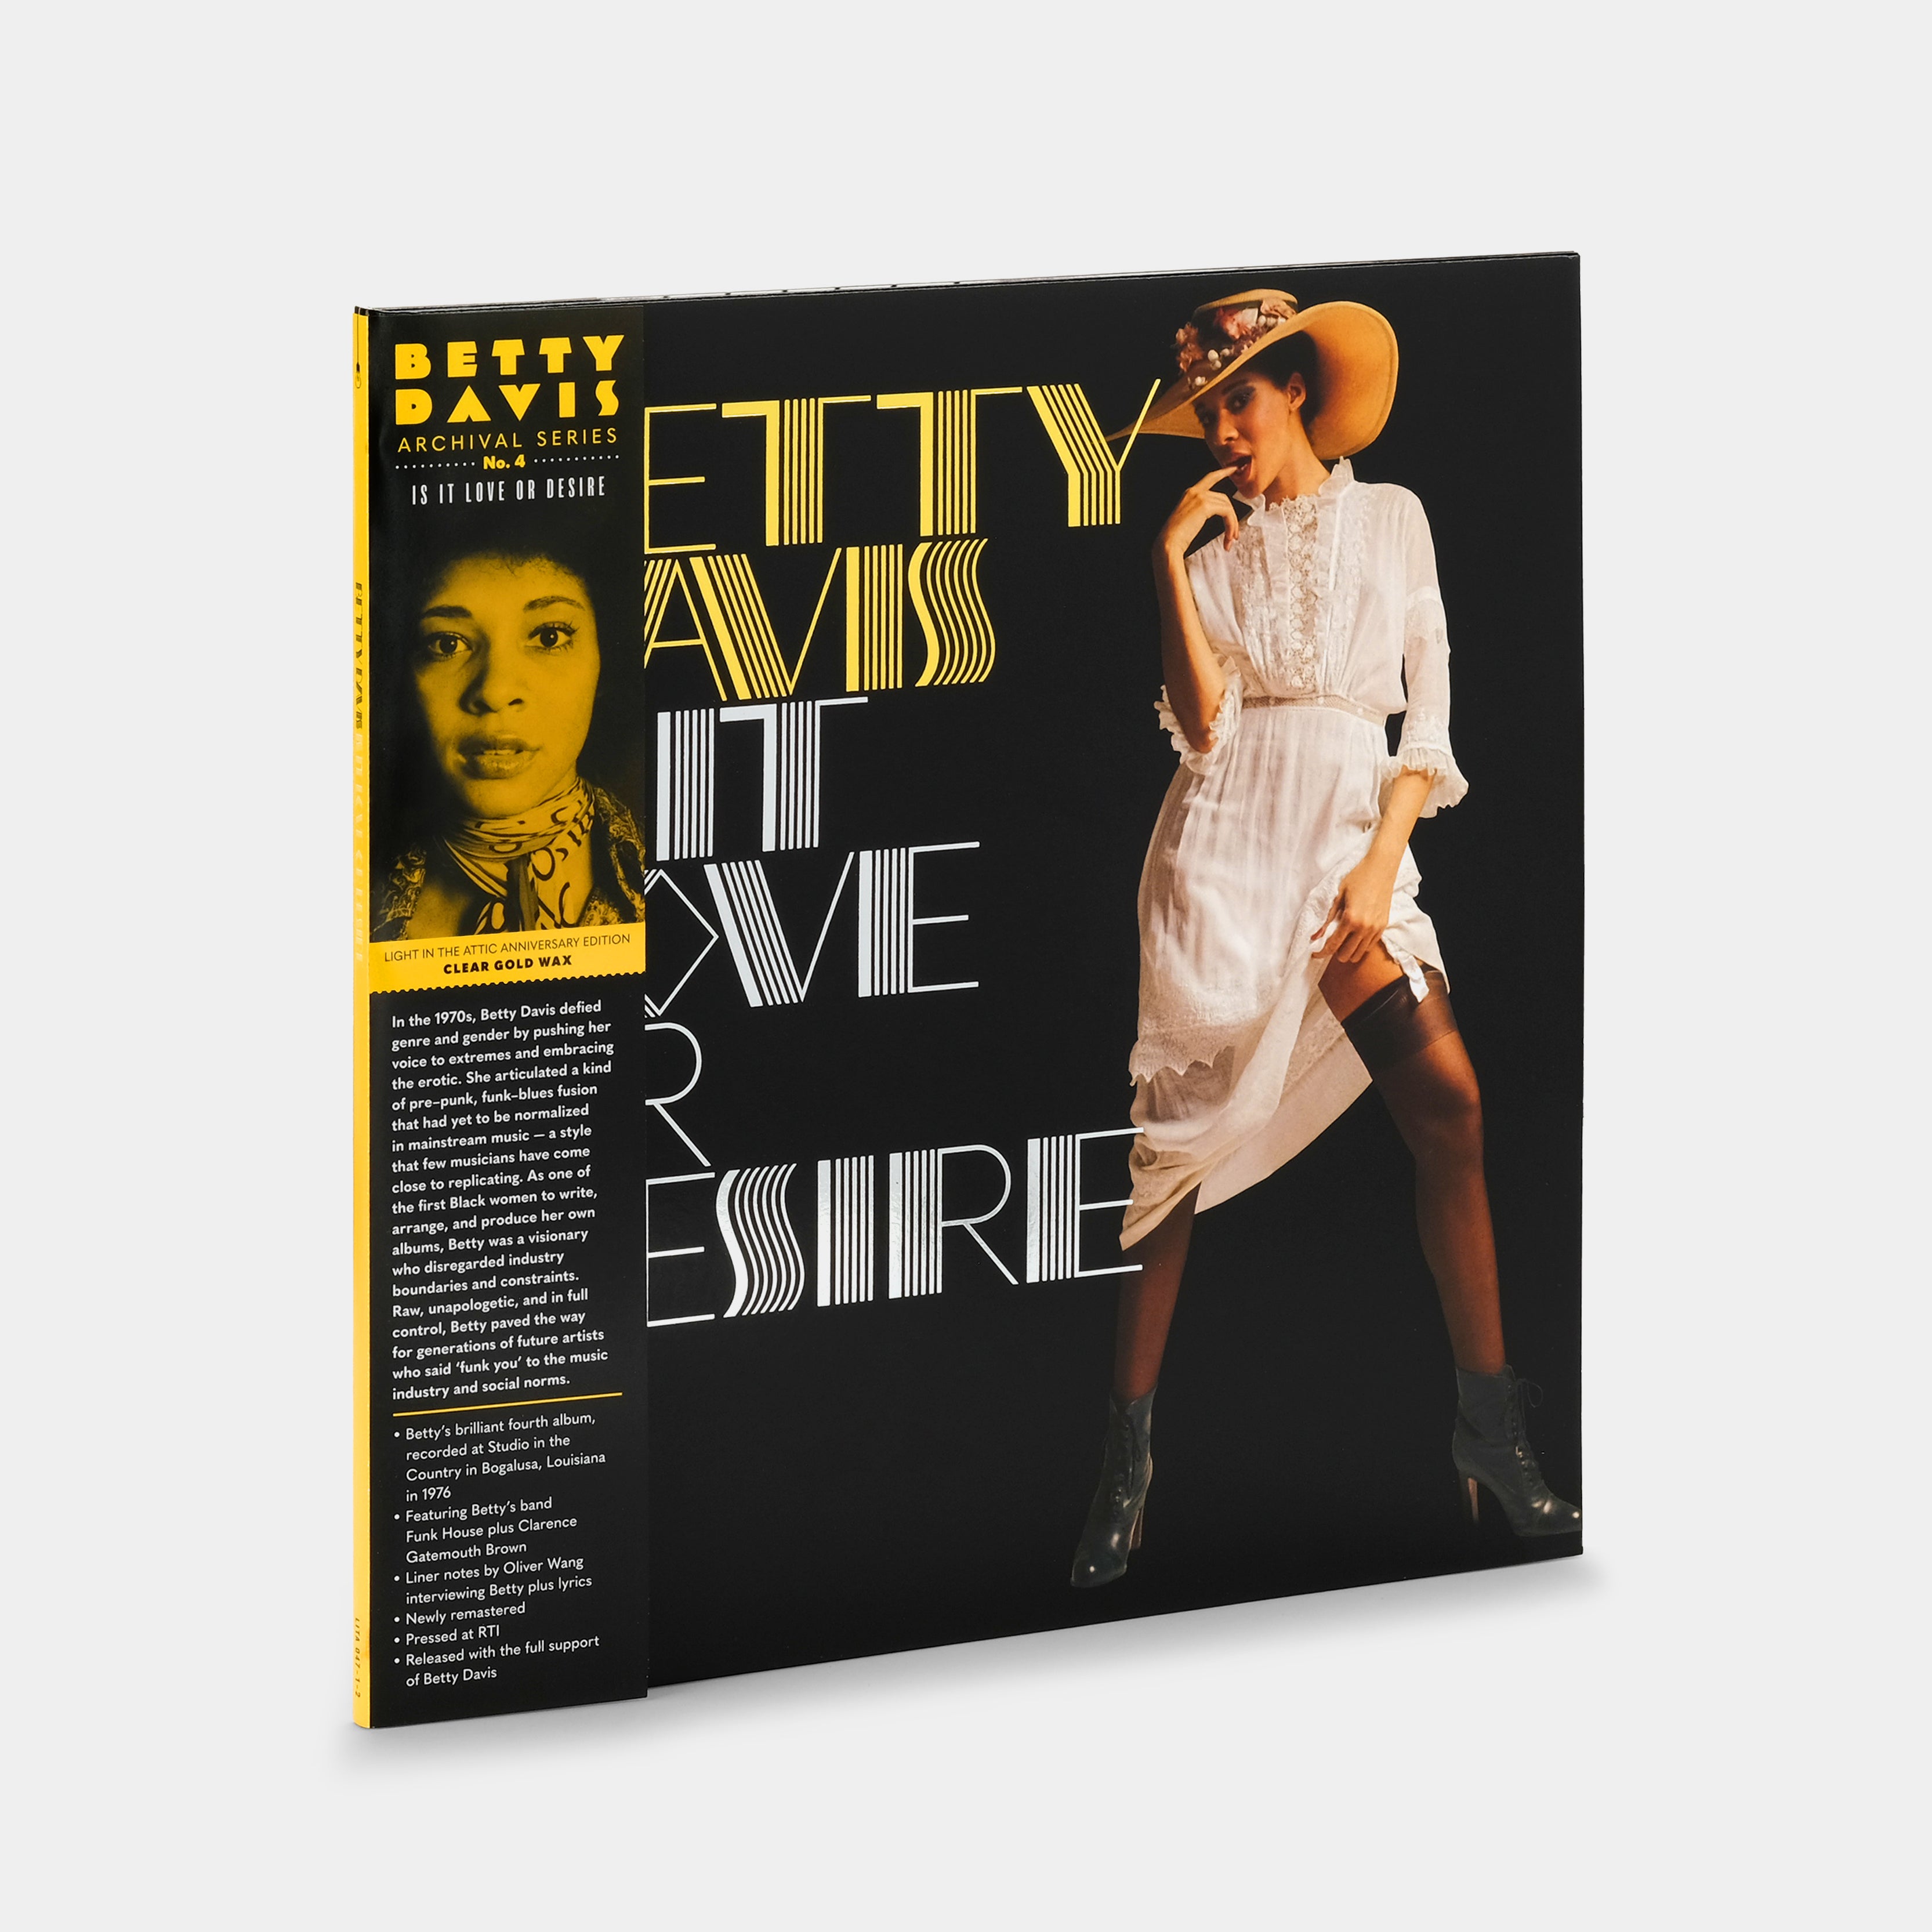 Betty Davis - Is It Love Or Desire LP Clear Gold Vinyl Record